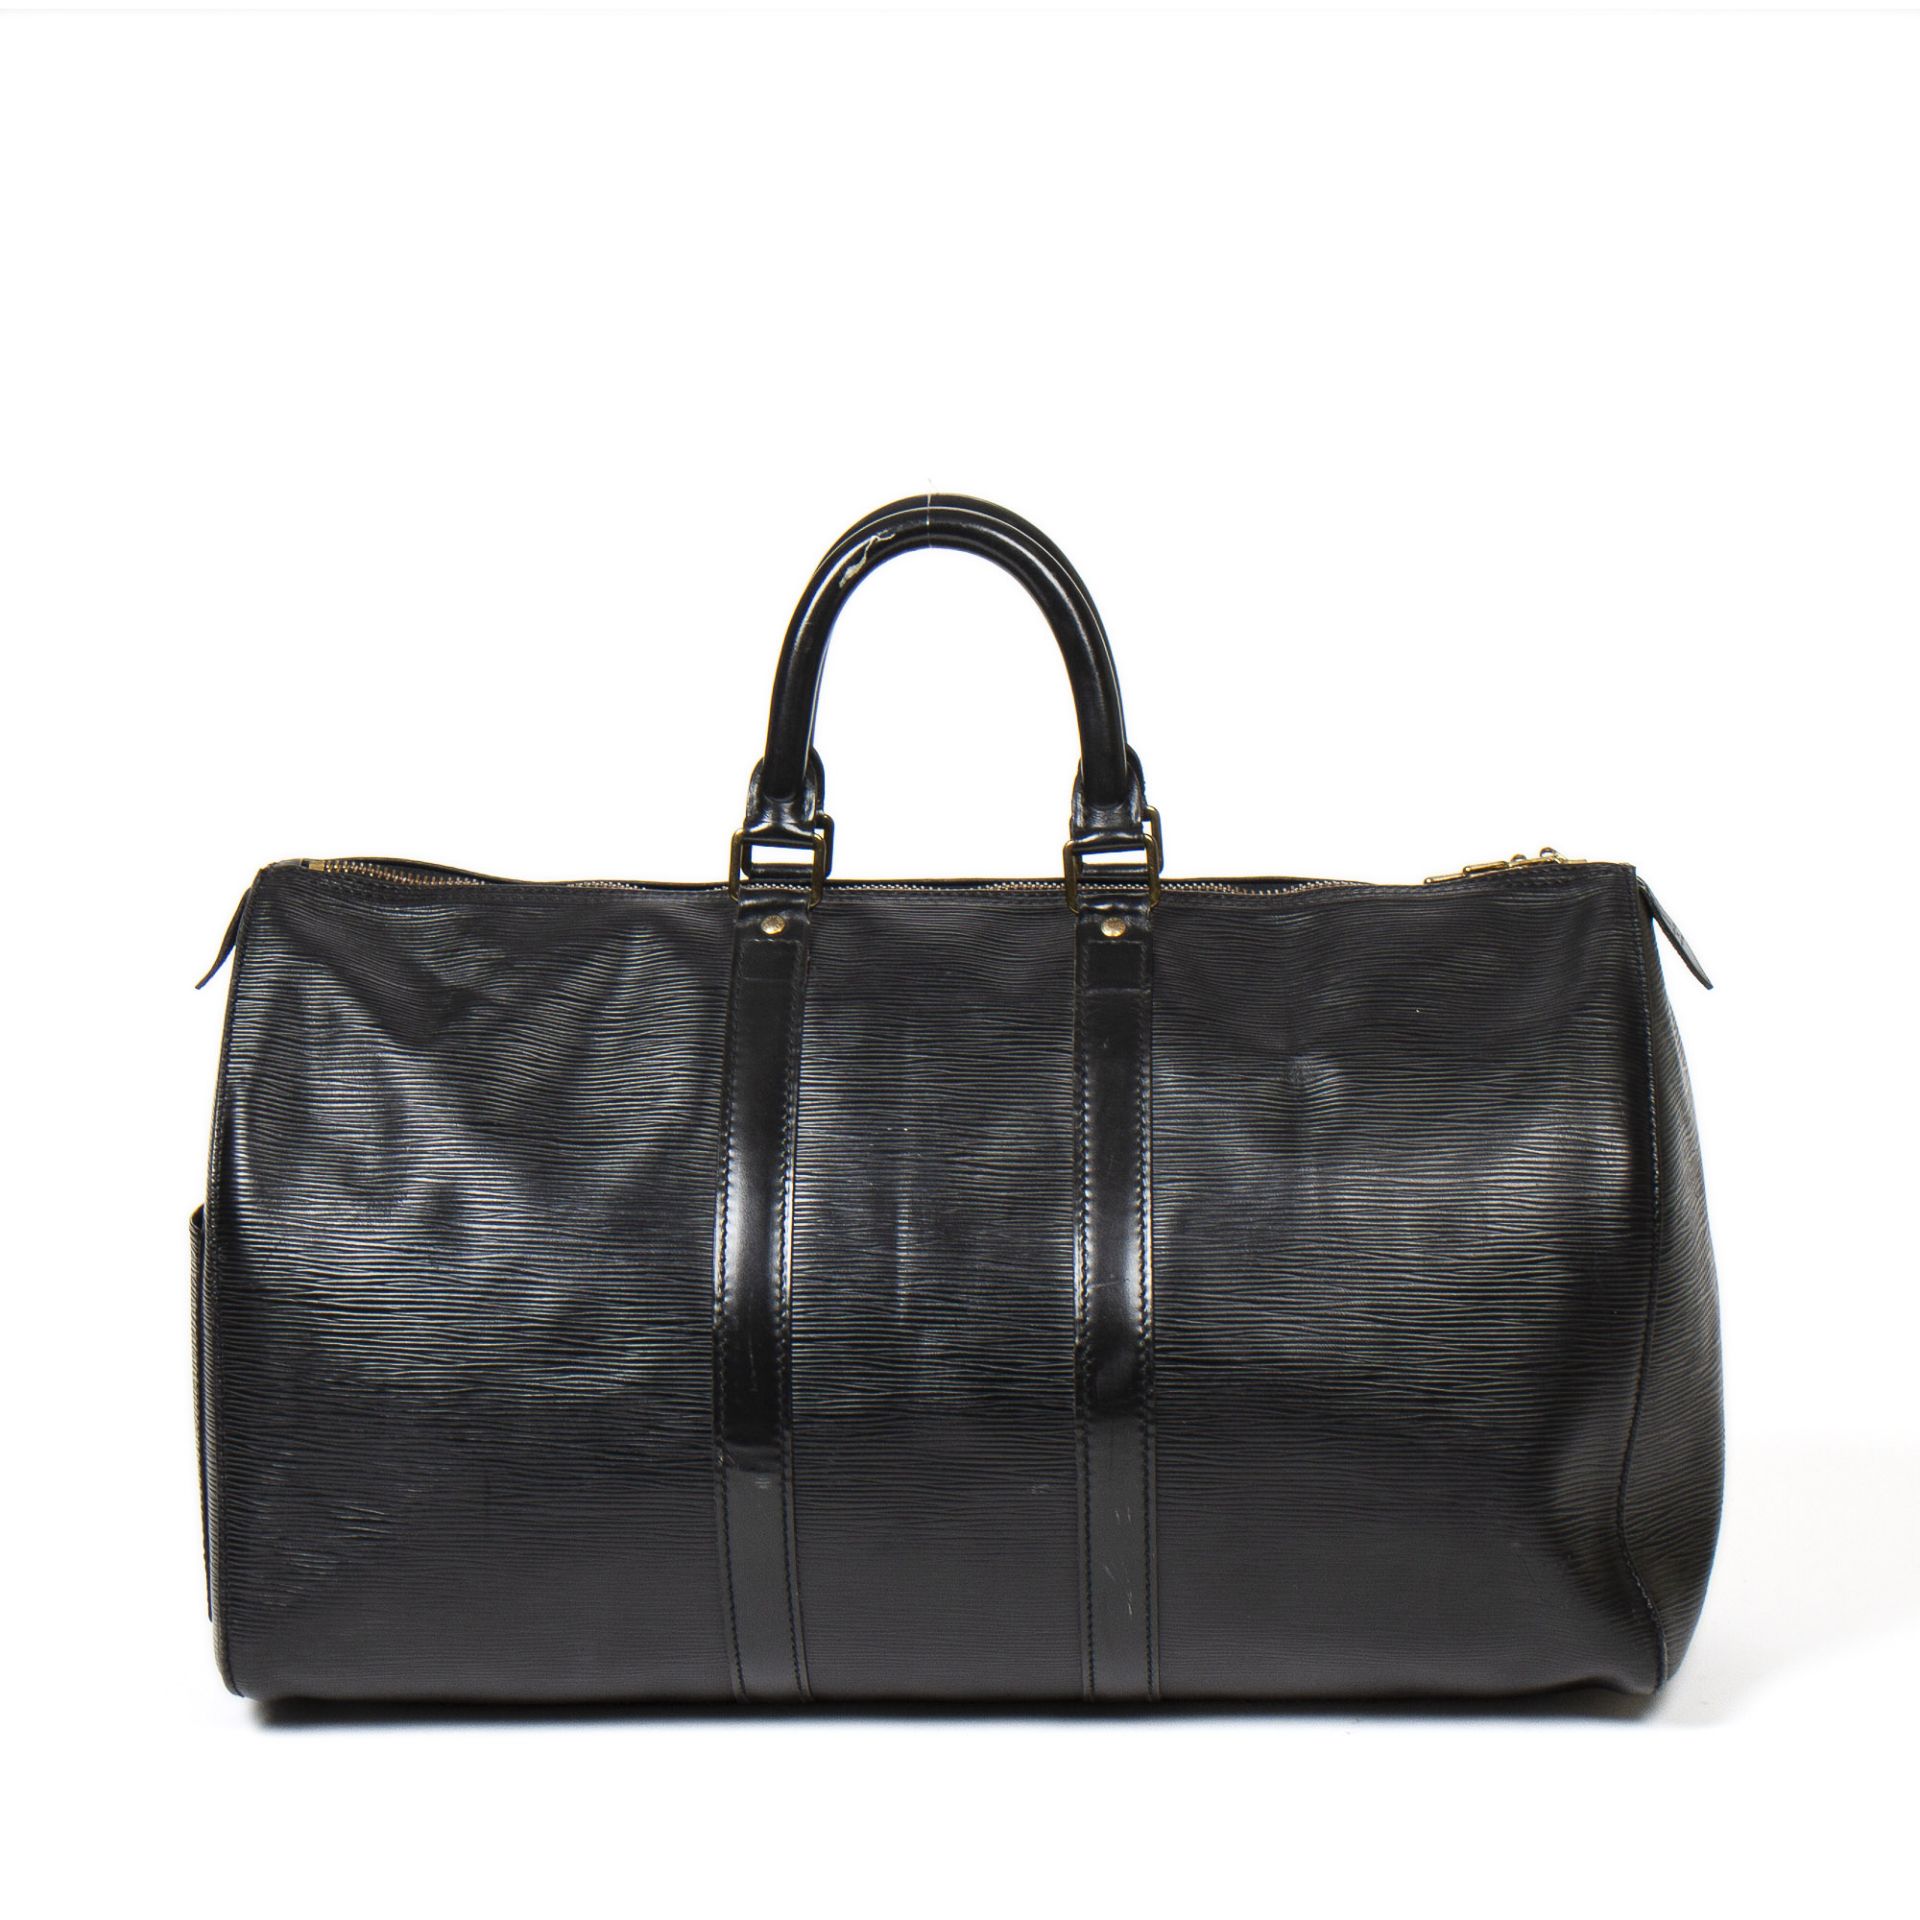 Louis Vuitton Black Keepall Travel Bag - Image 6 of 12